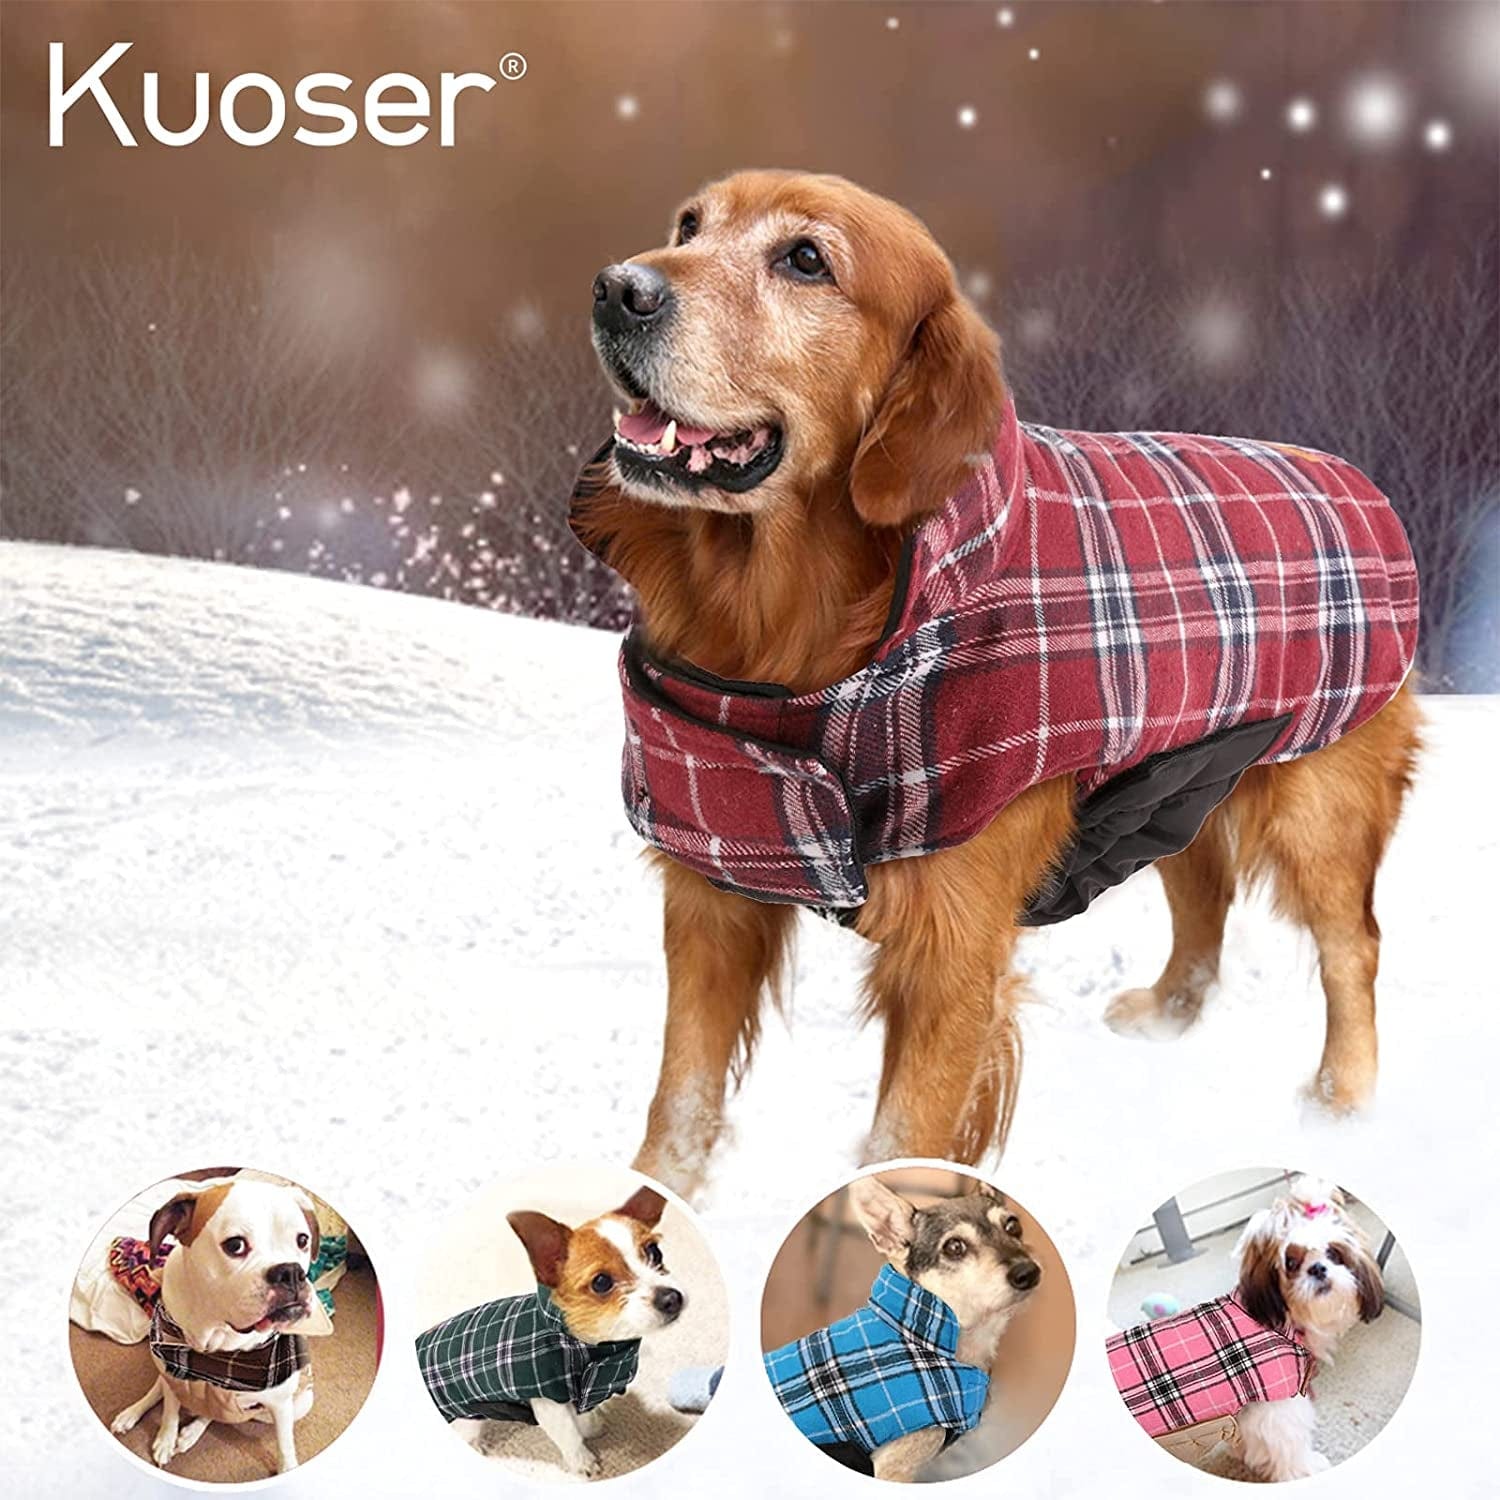 Kuoser Warm Dog Coat, Reversible Dog Jacket Waterproof Dog Winter Coat British Style Plaid Dog Clothes Pet Dog Cold Weather Coats Cozy Snow Jacket Vest for Small Medium Large Dogs Red M